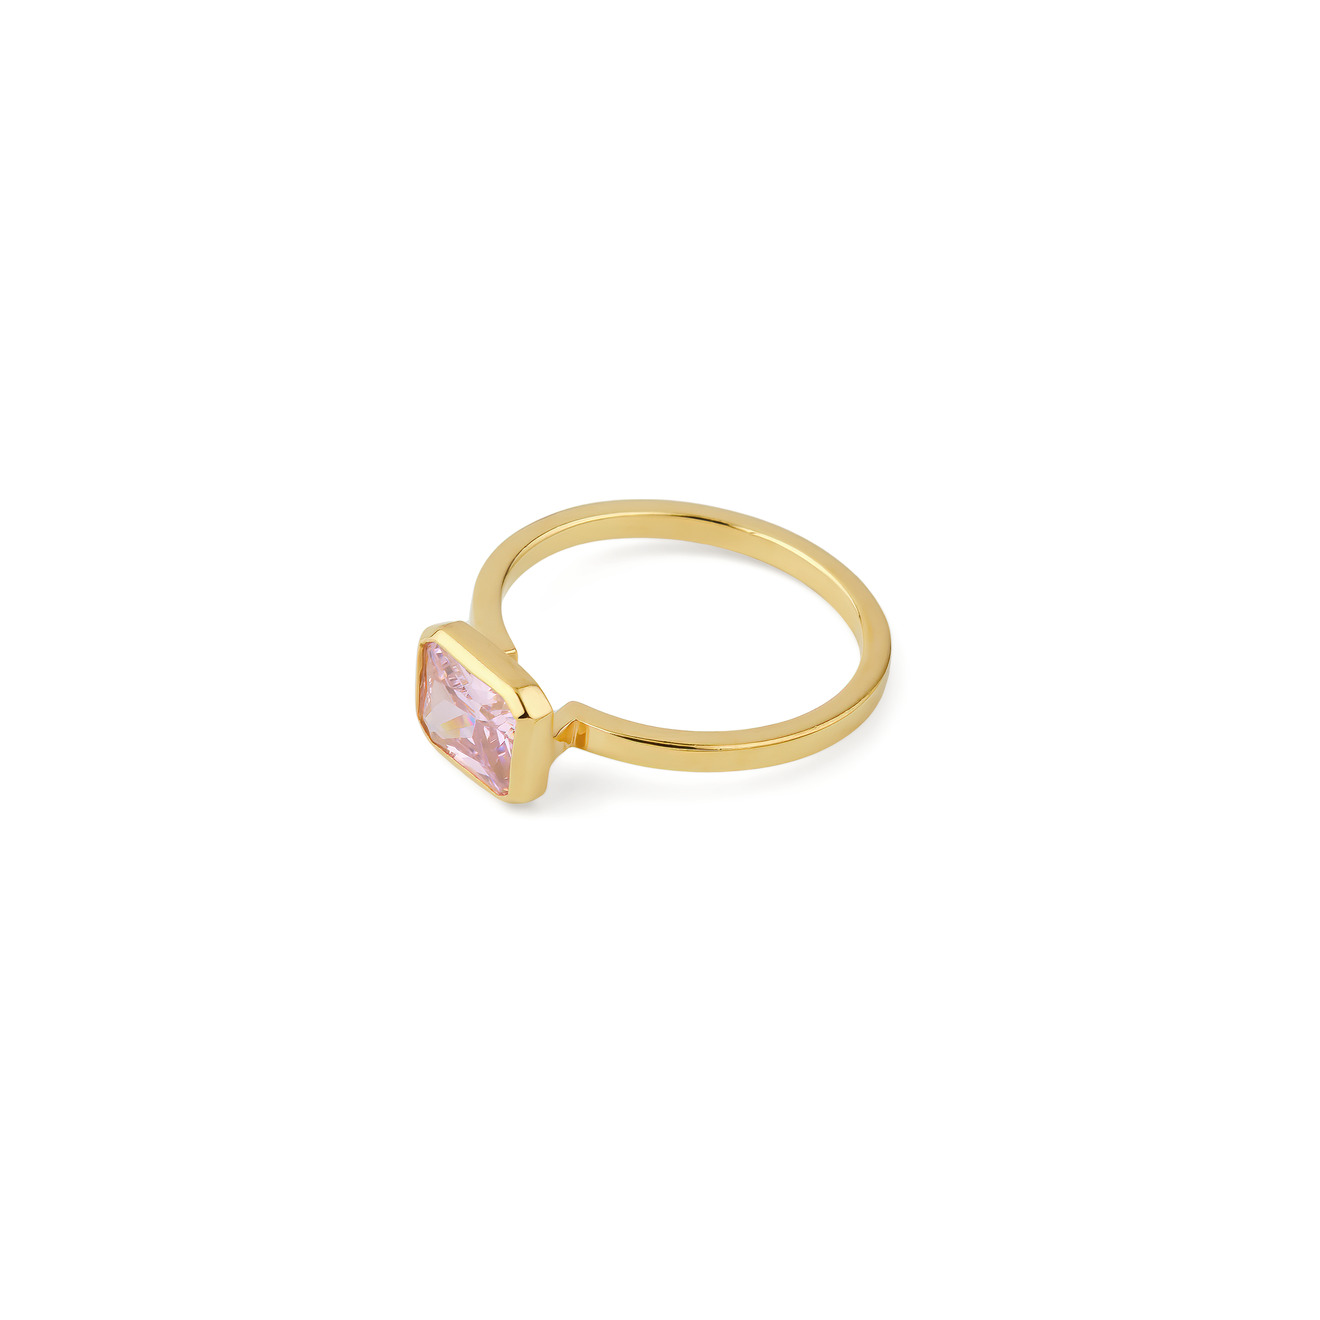 KRASHE jewellery Позолоченное кольцо Lollypop с розовым кристаллом dzhanelli jewellery серебряное кольцо звезда фамильный хрусталь с бриллиантами dzhanelli jewellery